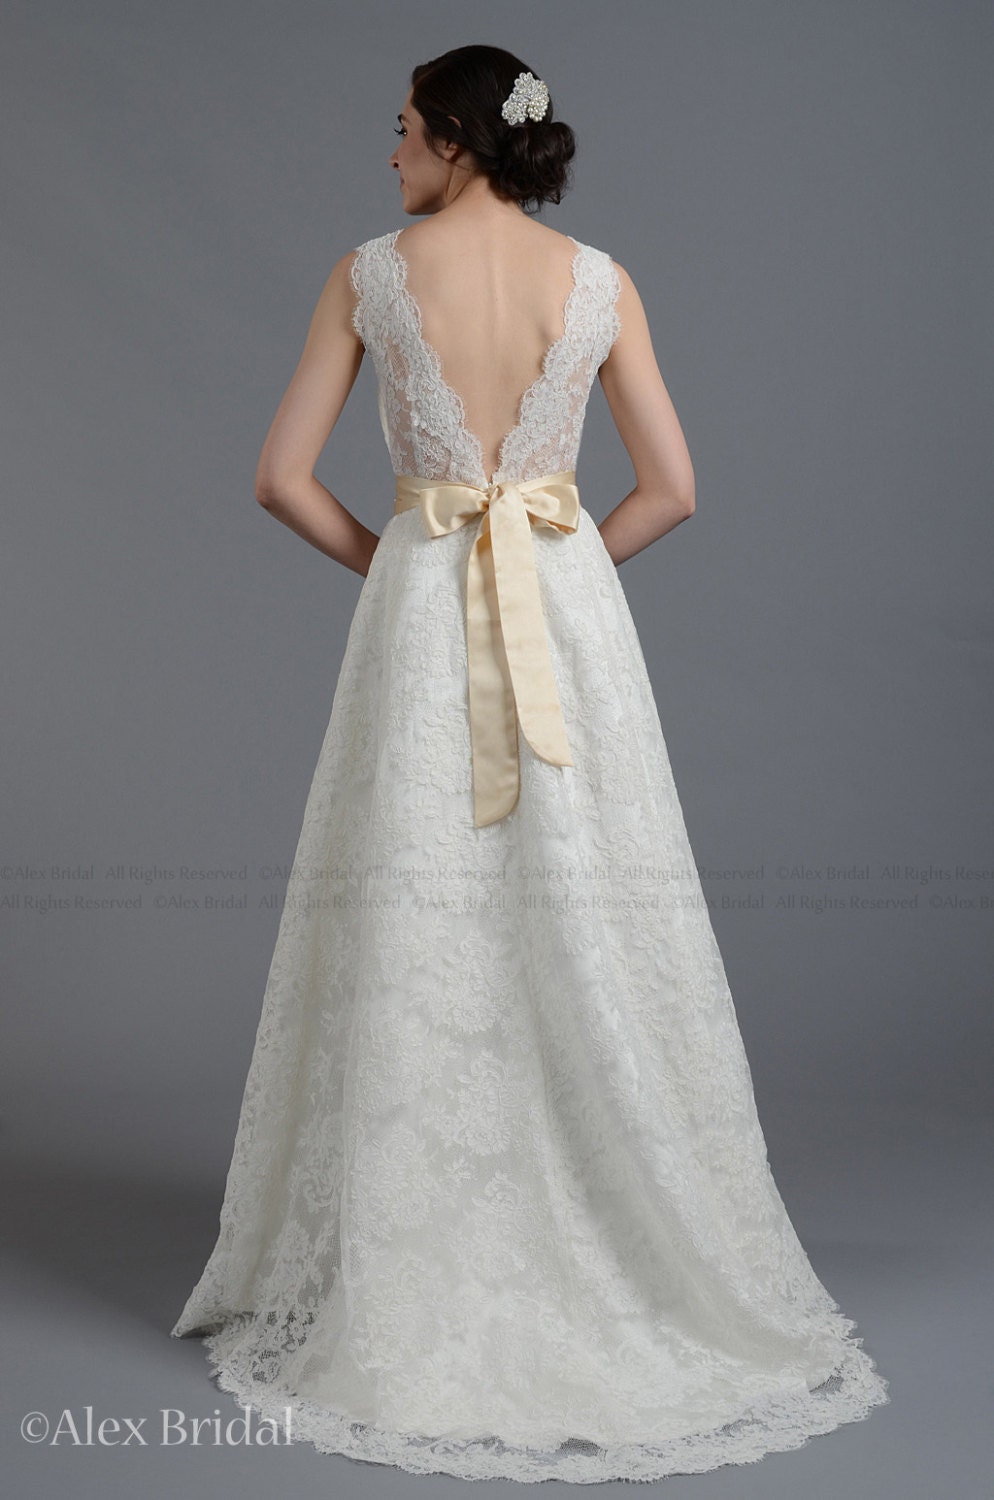 Lace wedding dress wedding dress bridal gown sleevelss